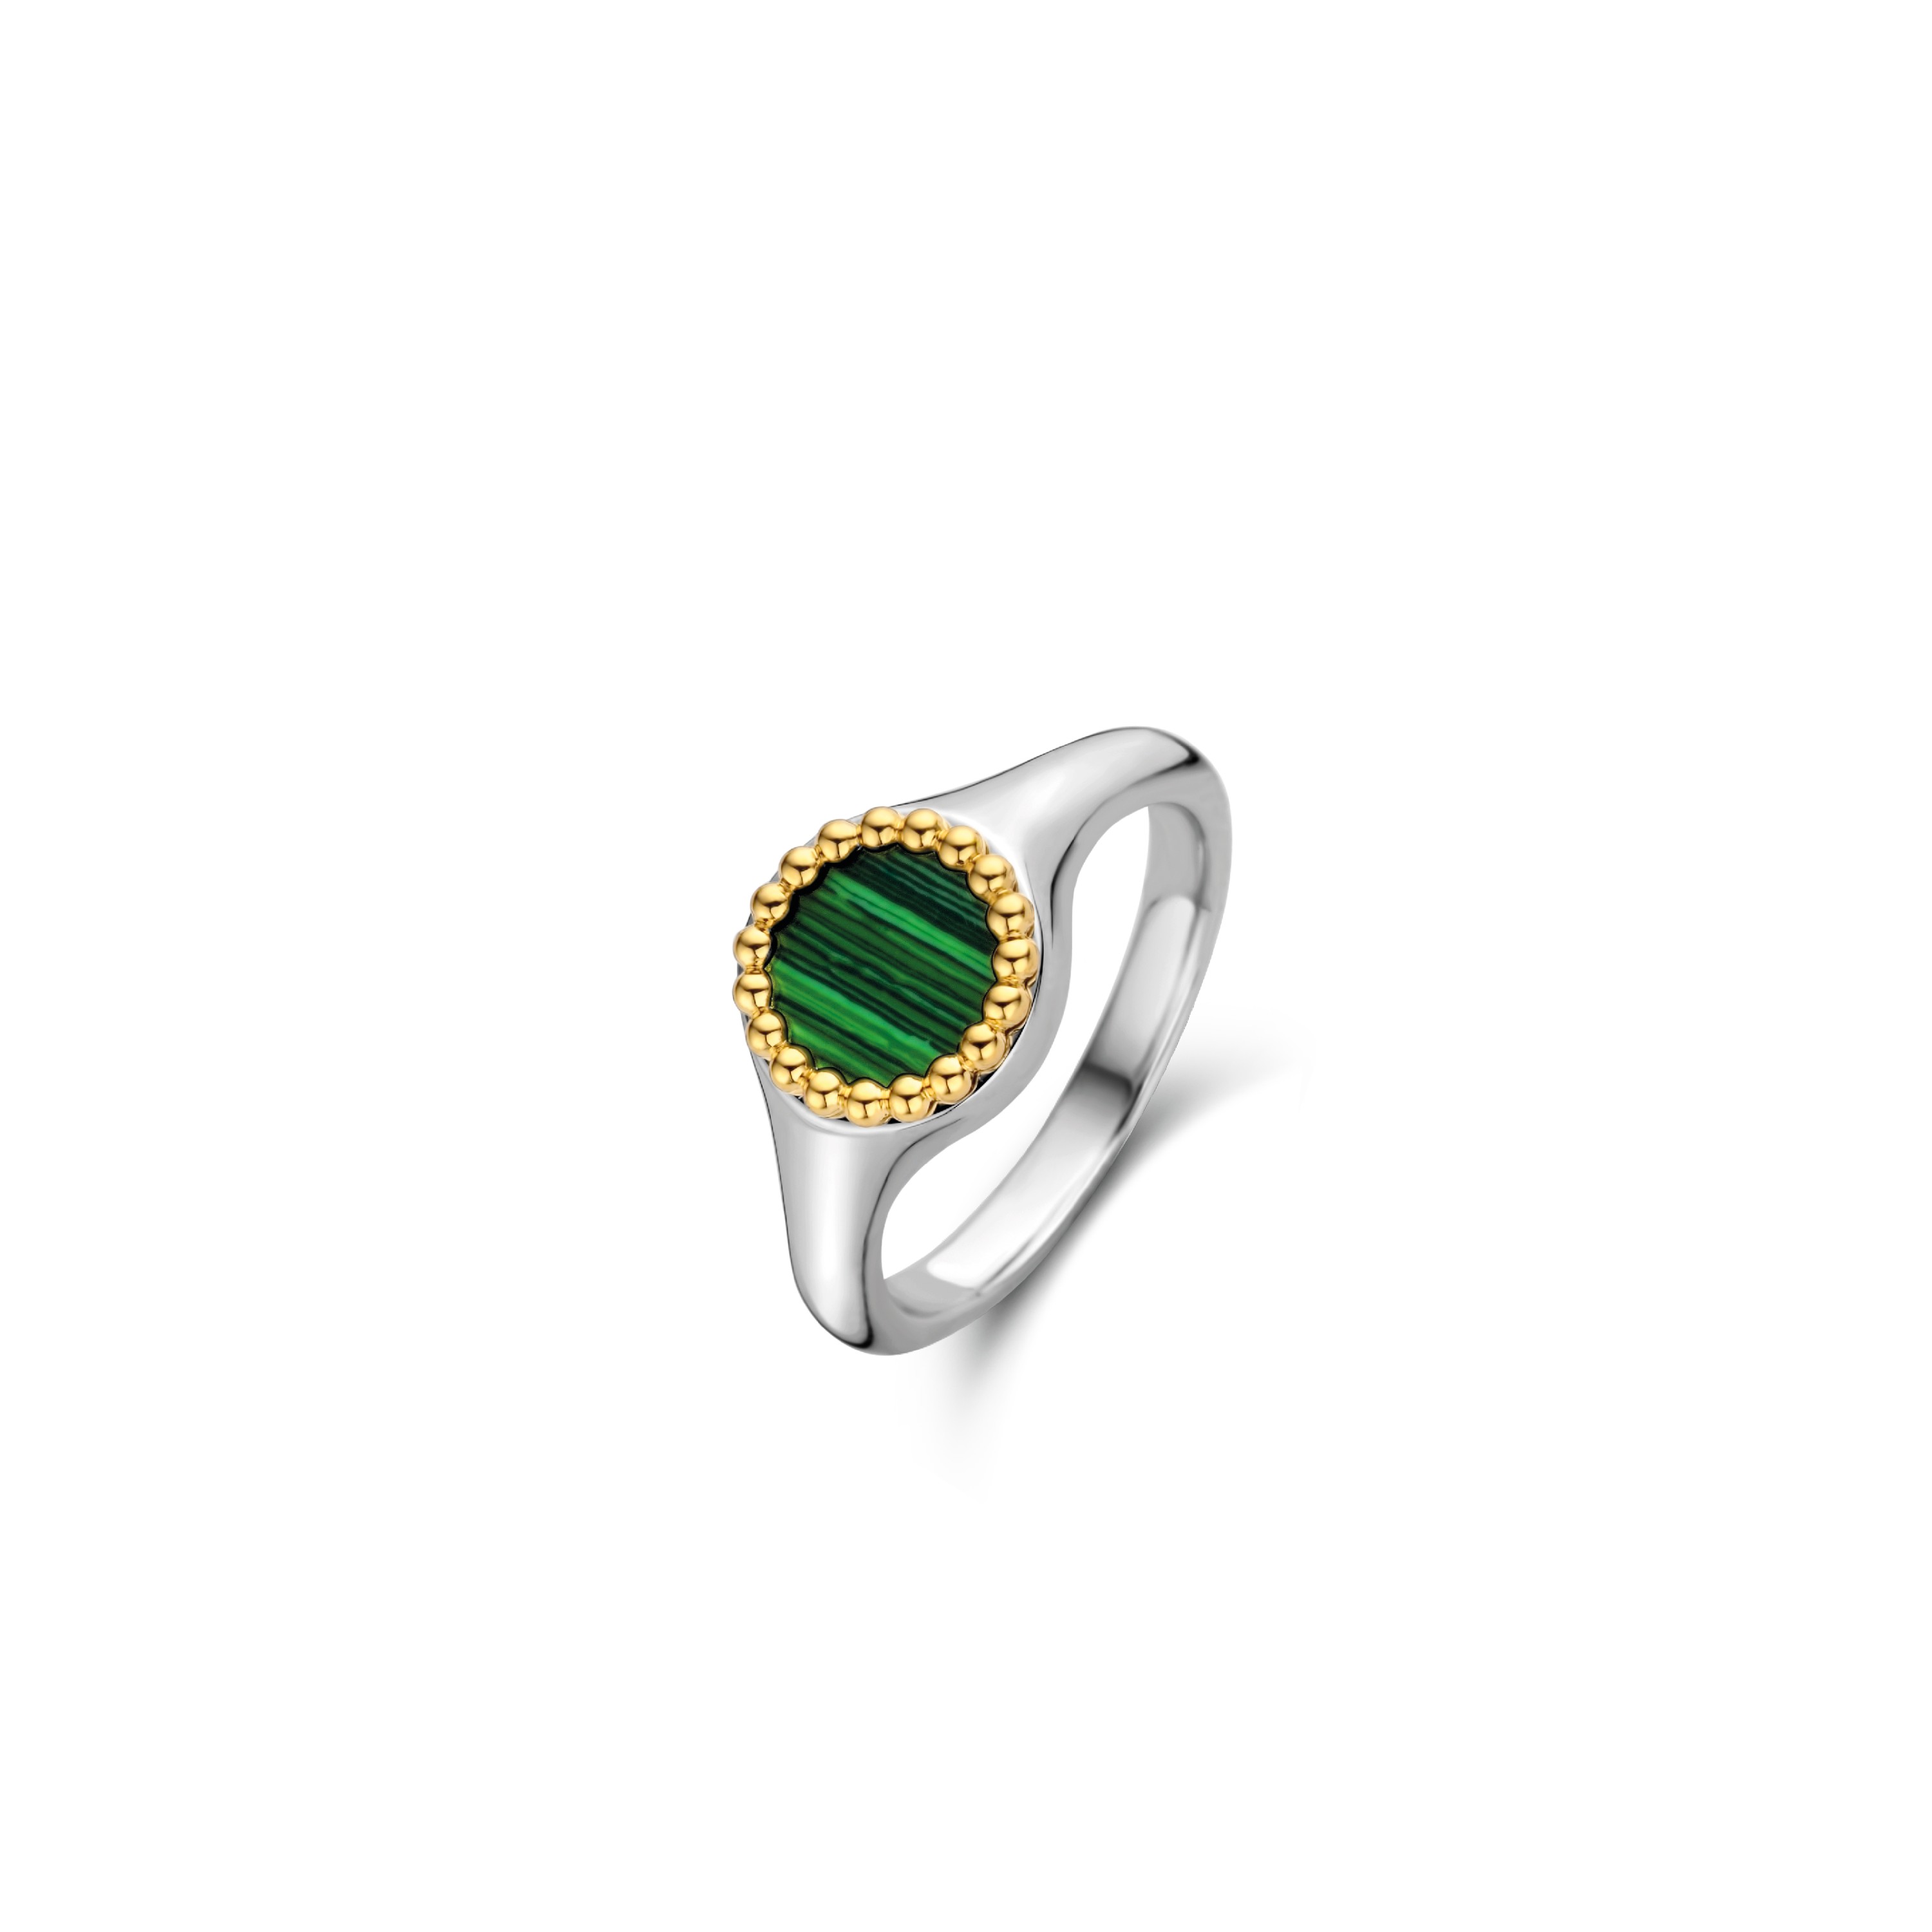 TI SENTO - Milano Ring 12207MA Gala Jewelers Inc. White Oak, PA